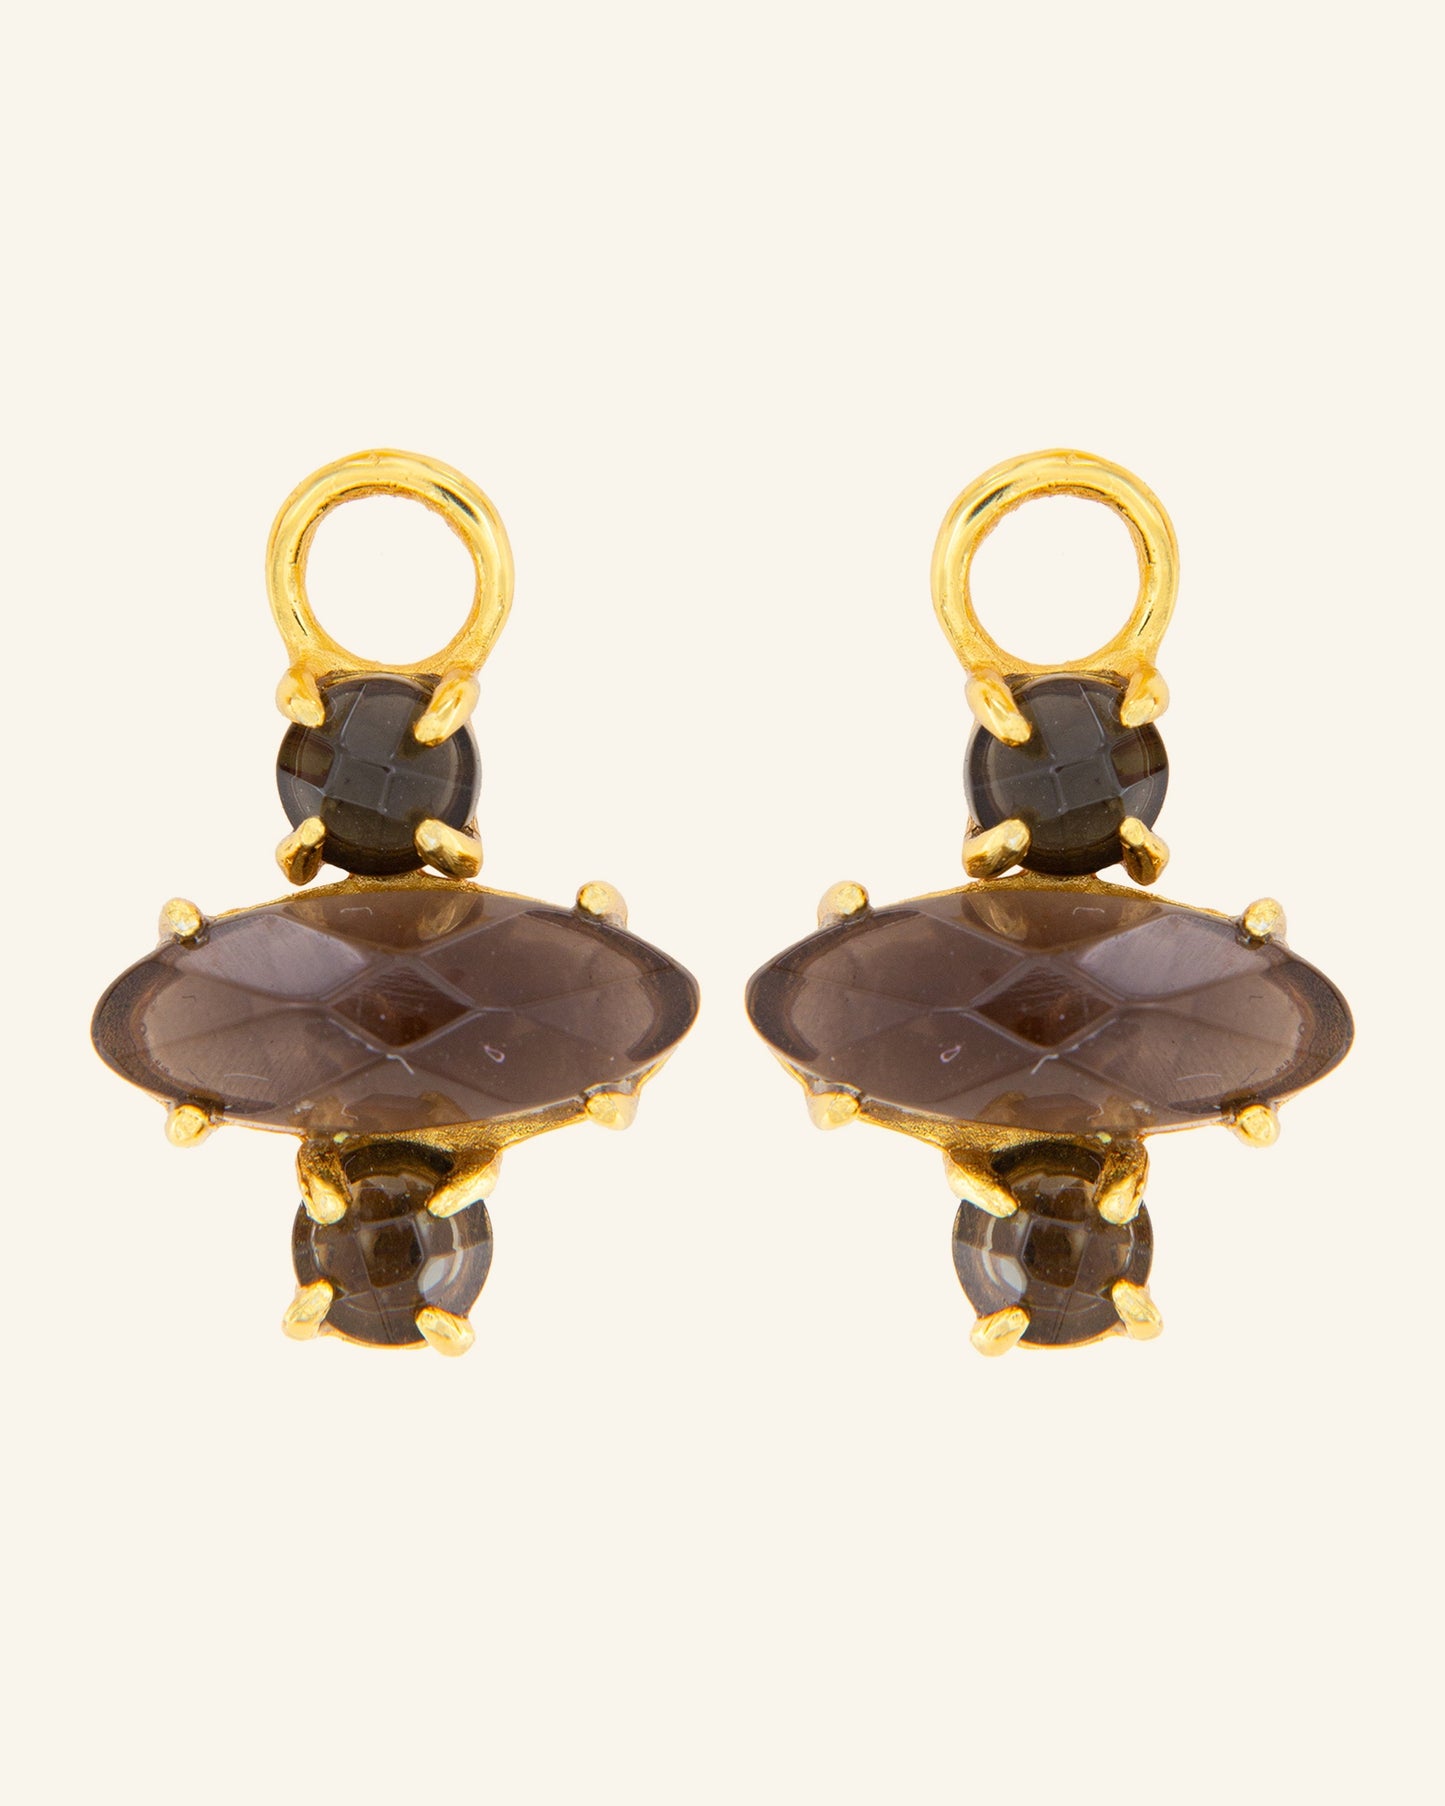 Cleopatra pendants with smoked quartz and onyx